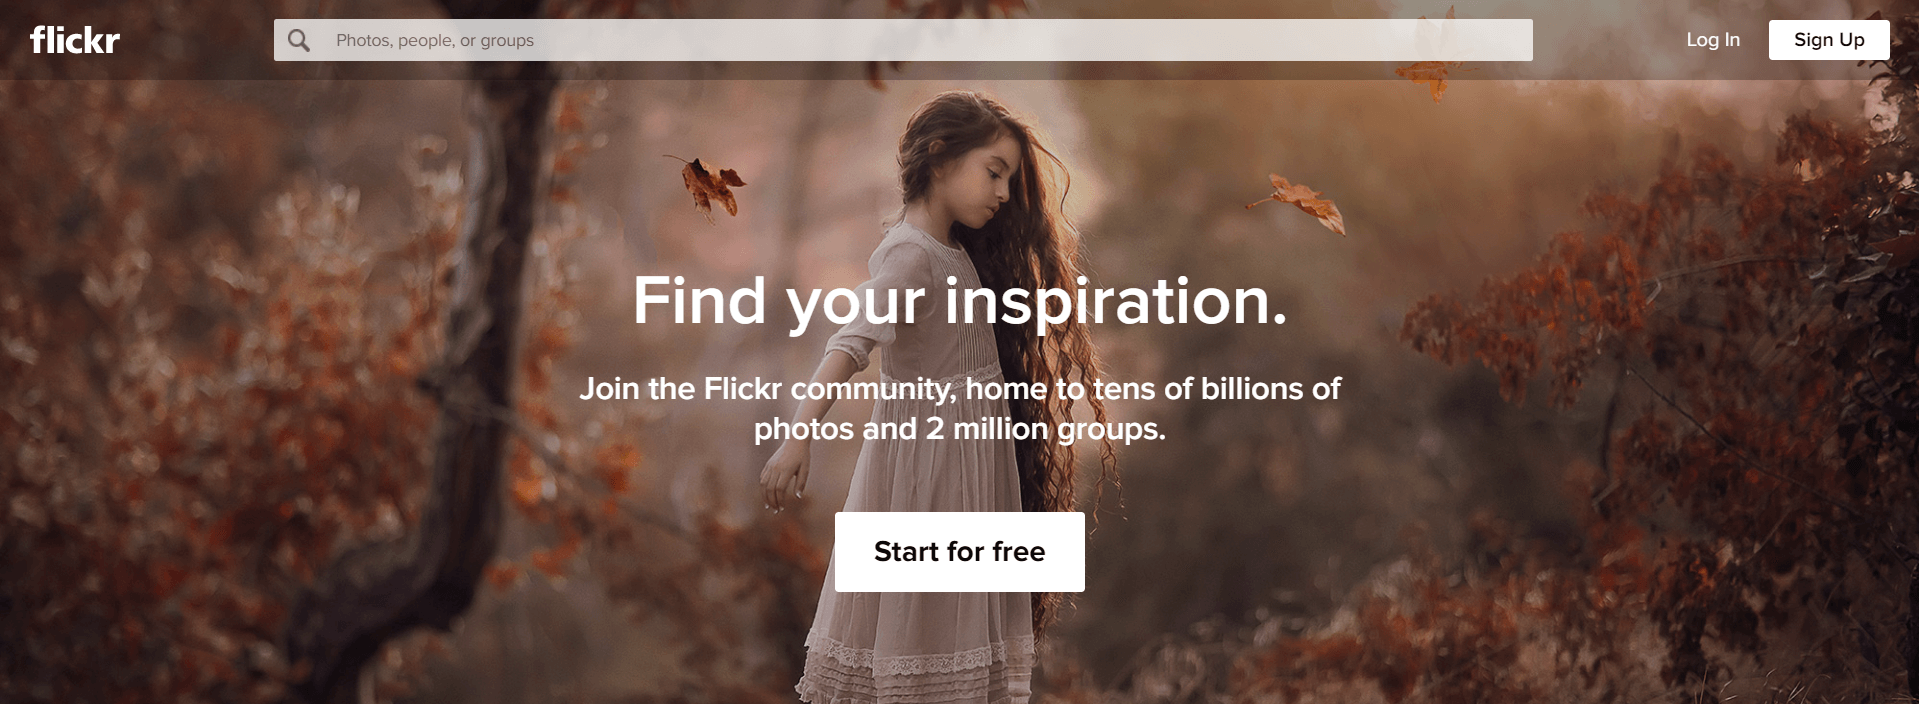 Flickr - Free Stock Photos Site